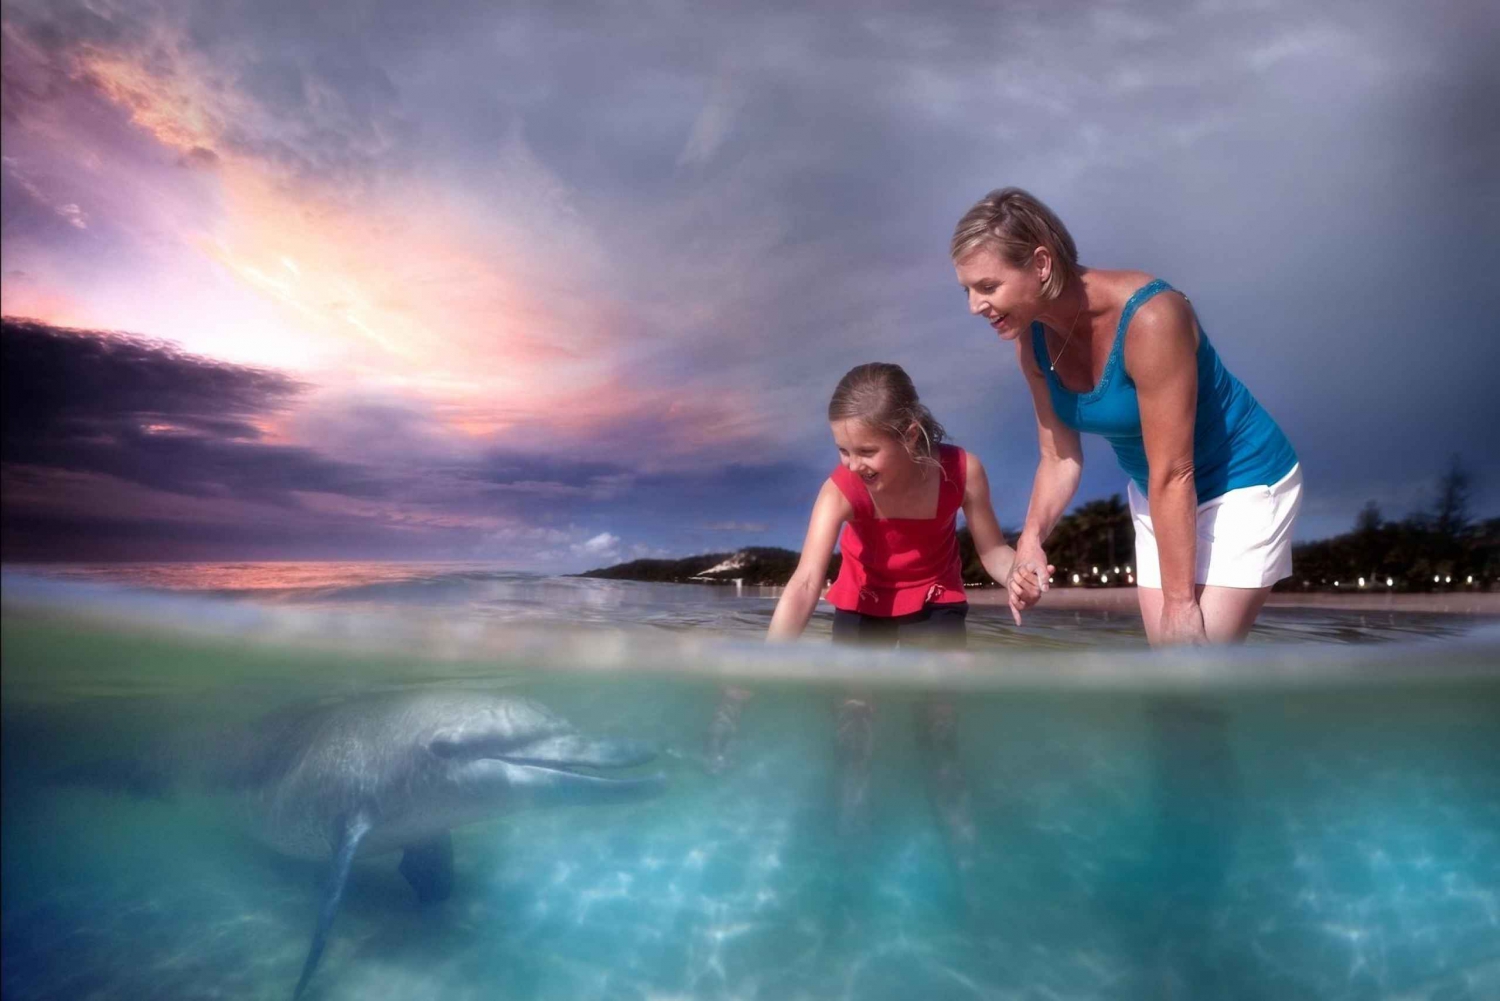 Moreton Island: Marine Discovery Cruise & Dolphin Feeding